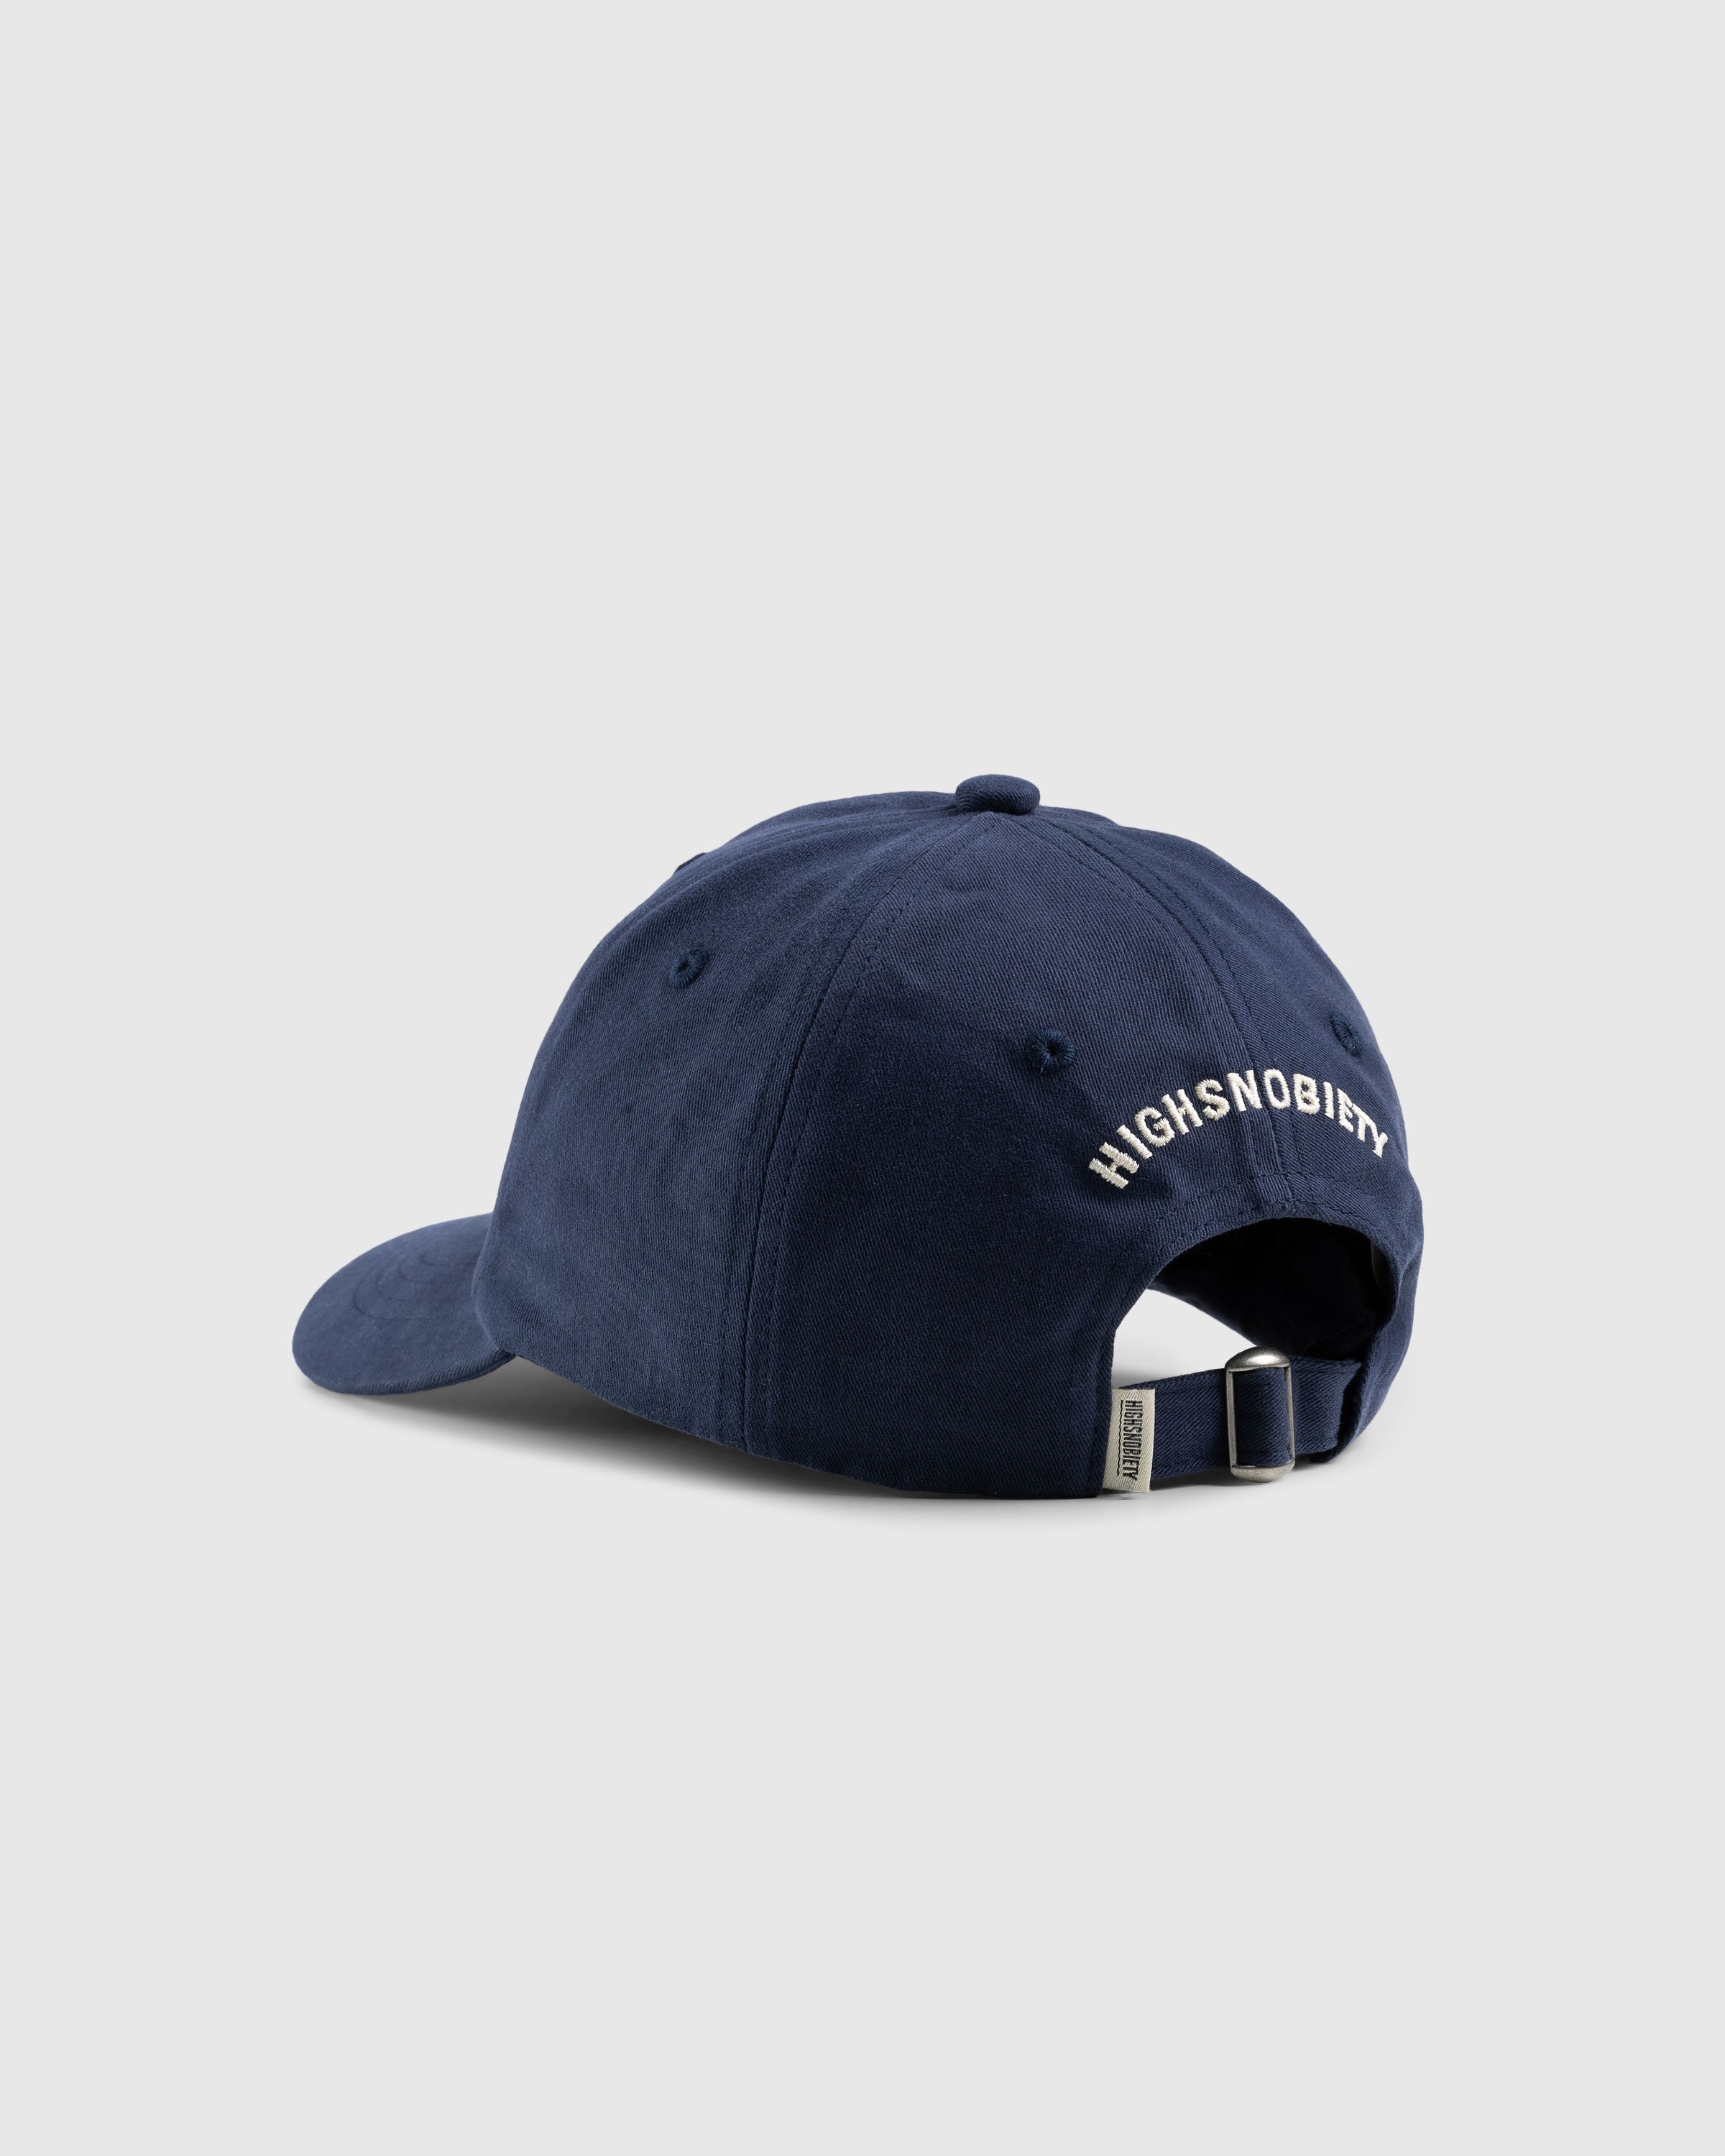 Highsnobiety - Neu York Navy Ball Cap - Accessories - Blue - Image 3